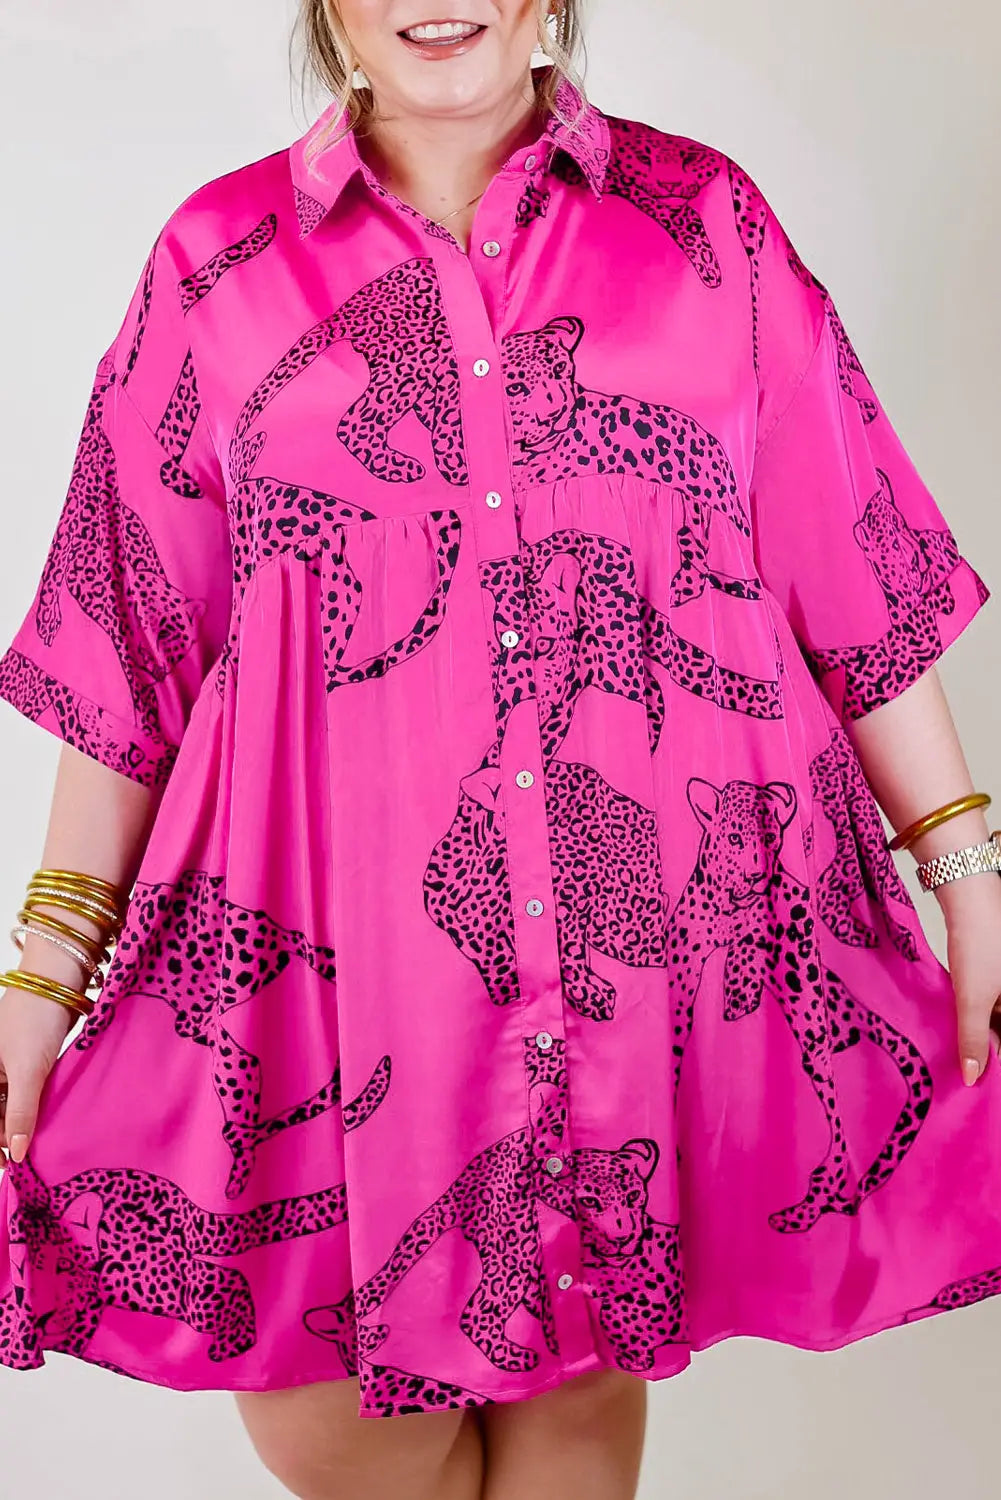 Rose red cheetah print bell sleeve mini shirt dress - 1x / 100% polyester - dresses